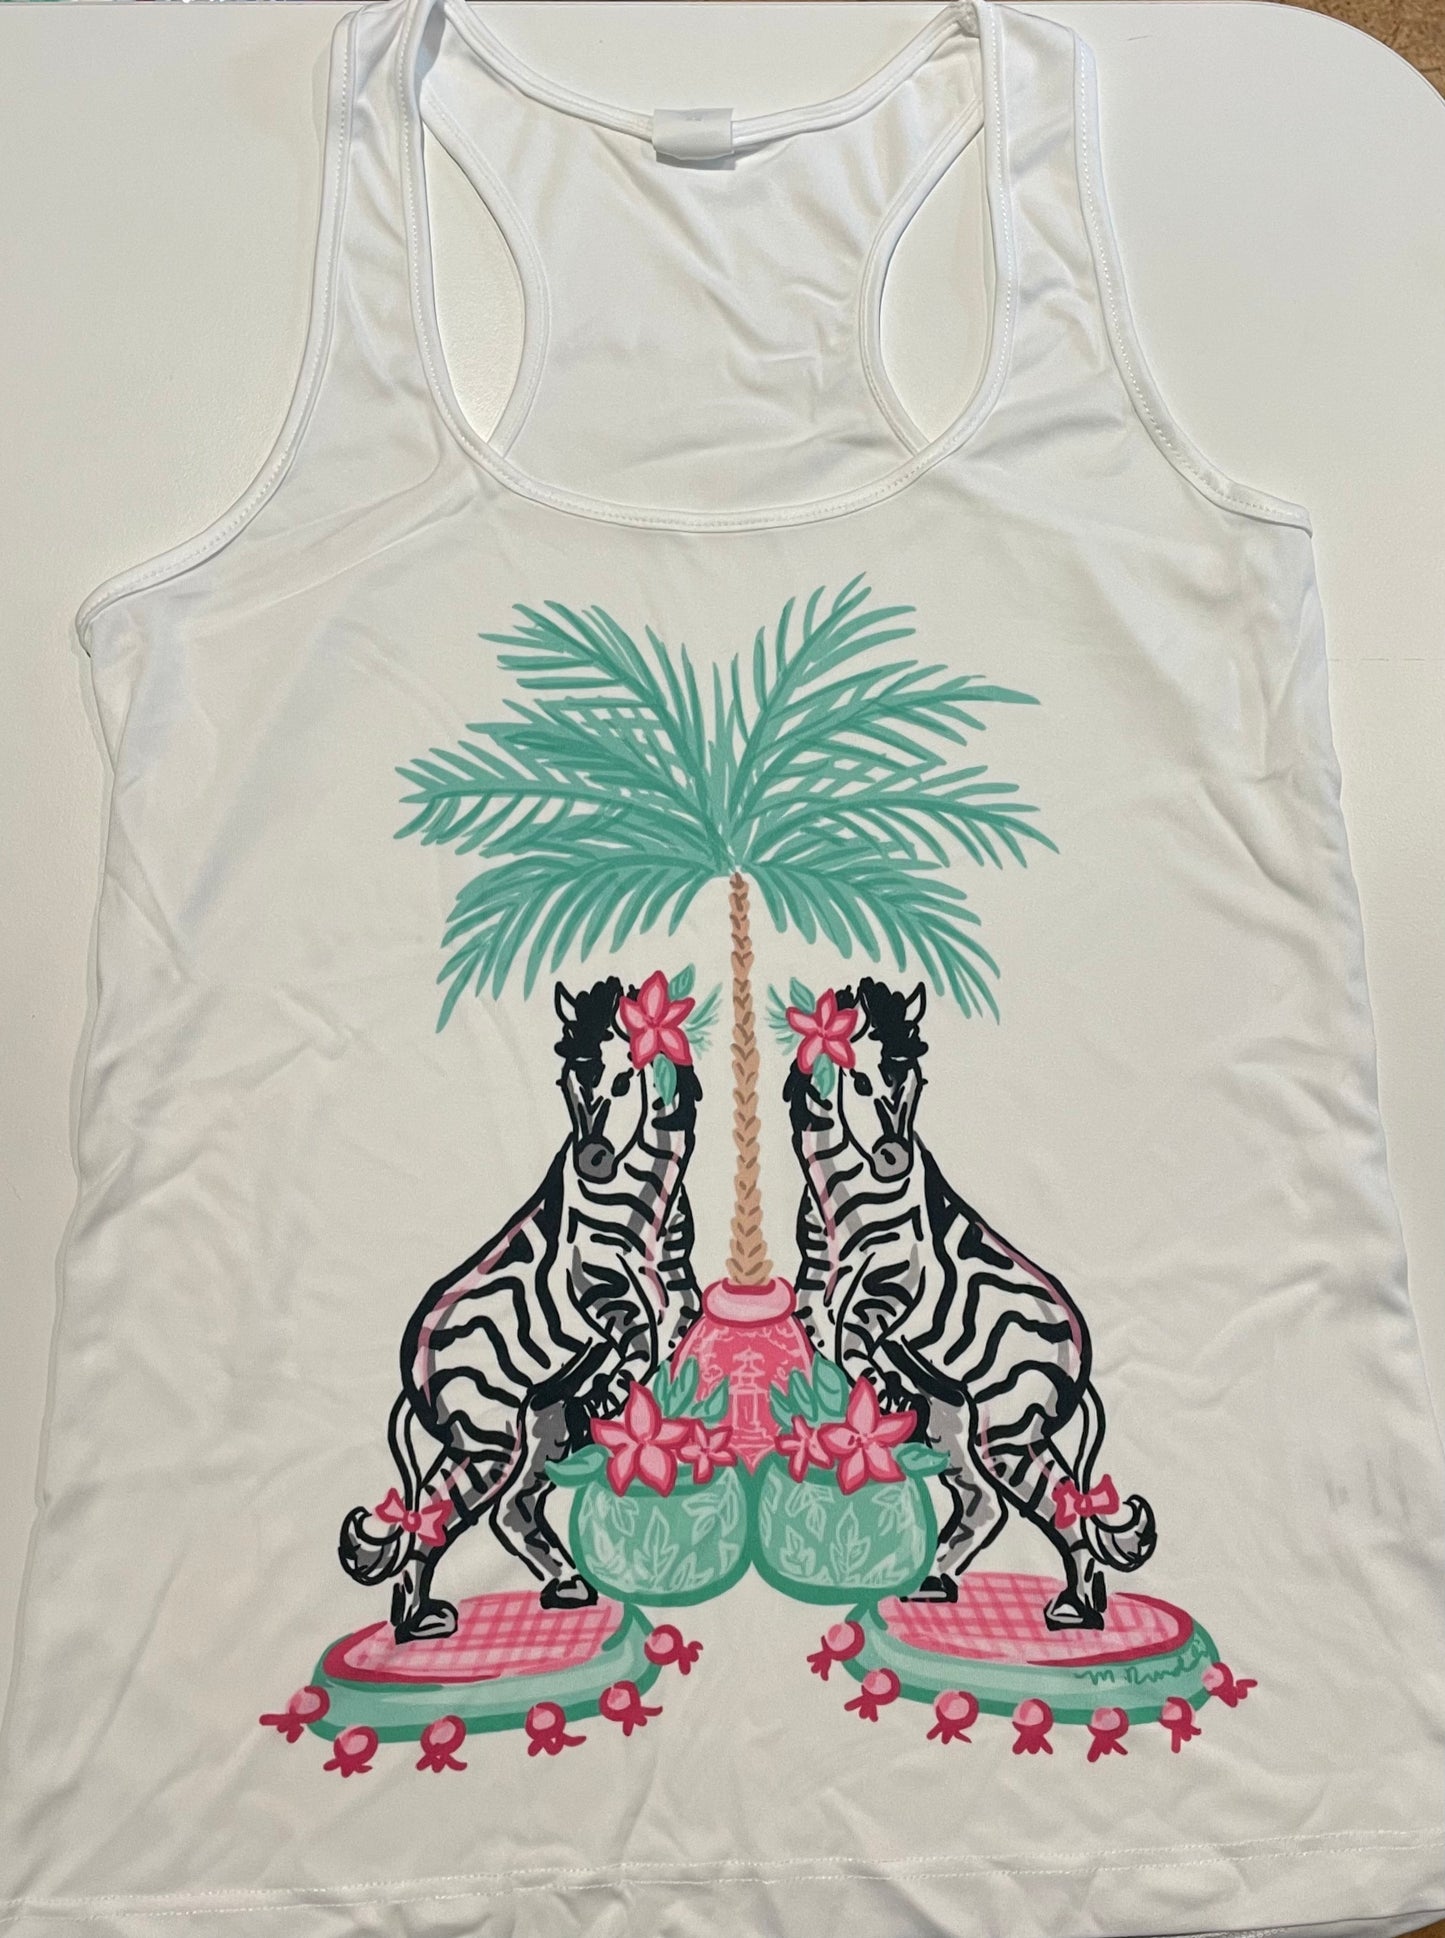 SALE! Friends That Lilly Zebras Illustration Shirts